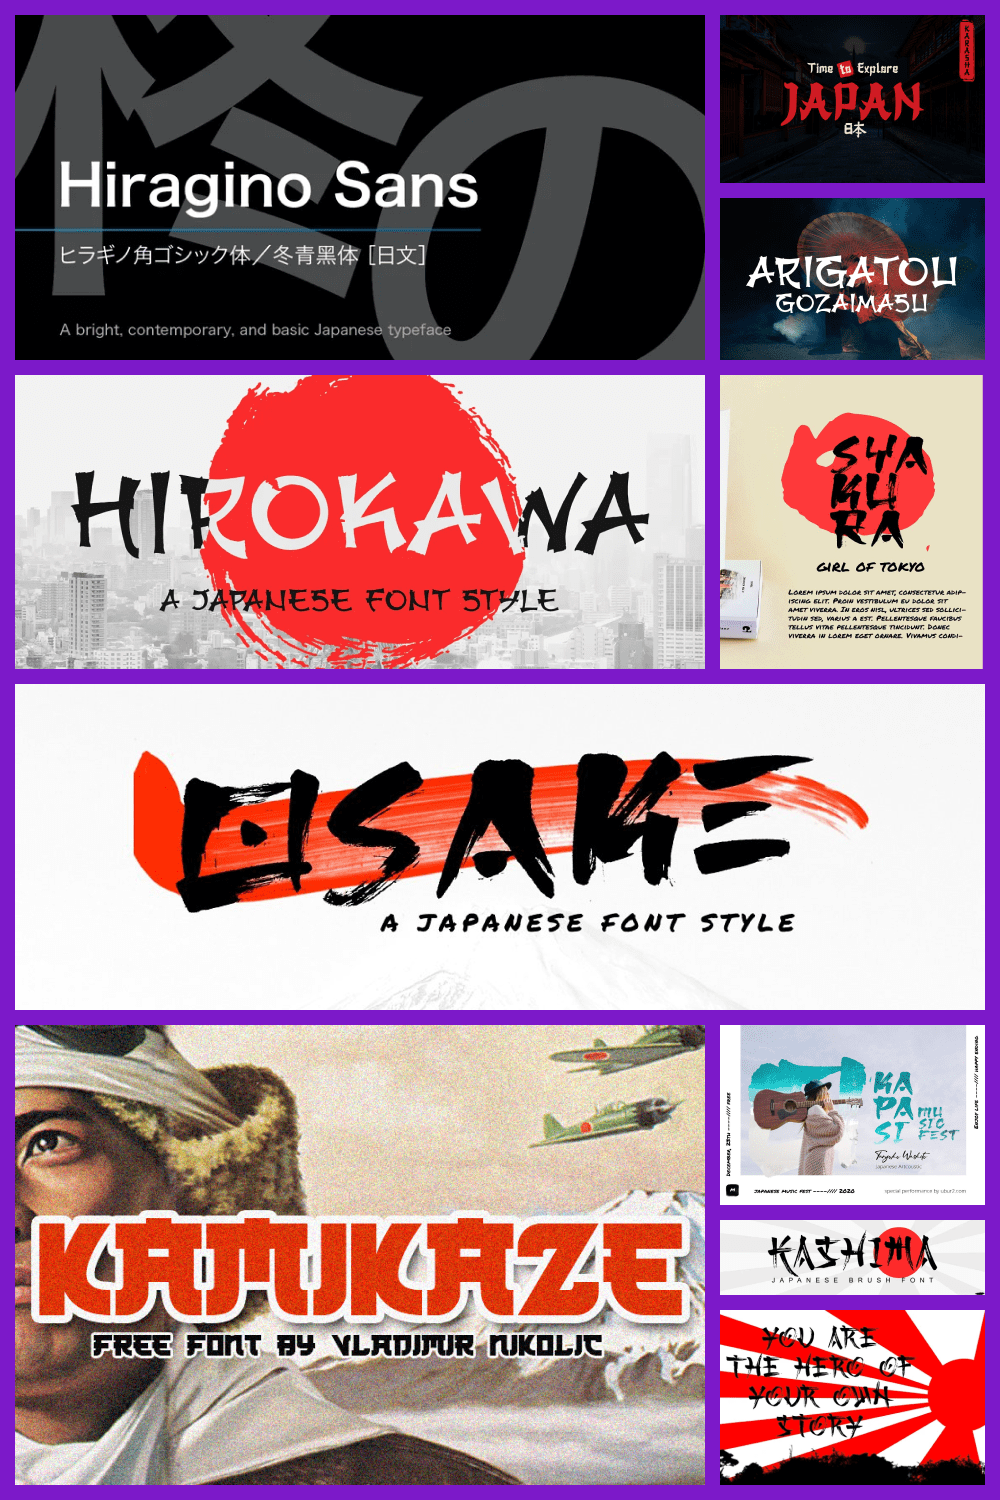 Japan Style Fonts Pinterest.